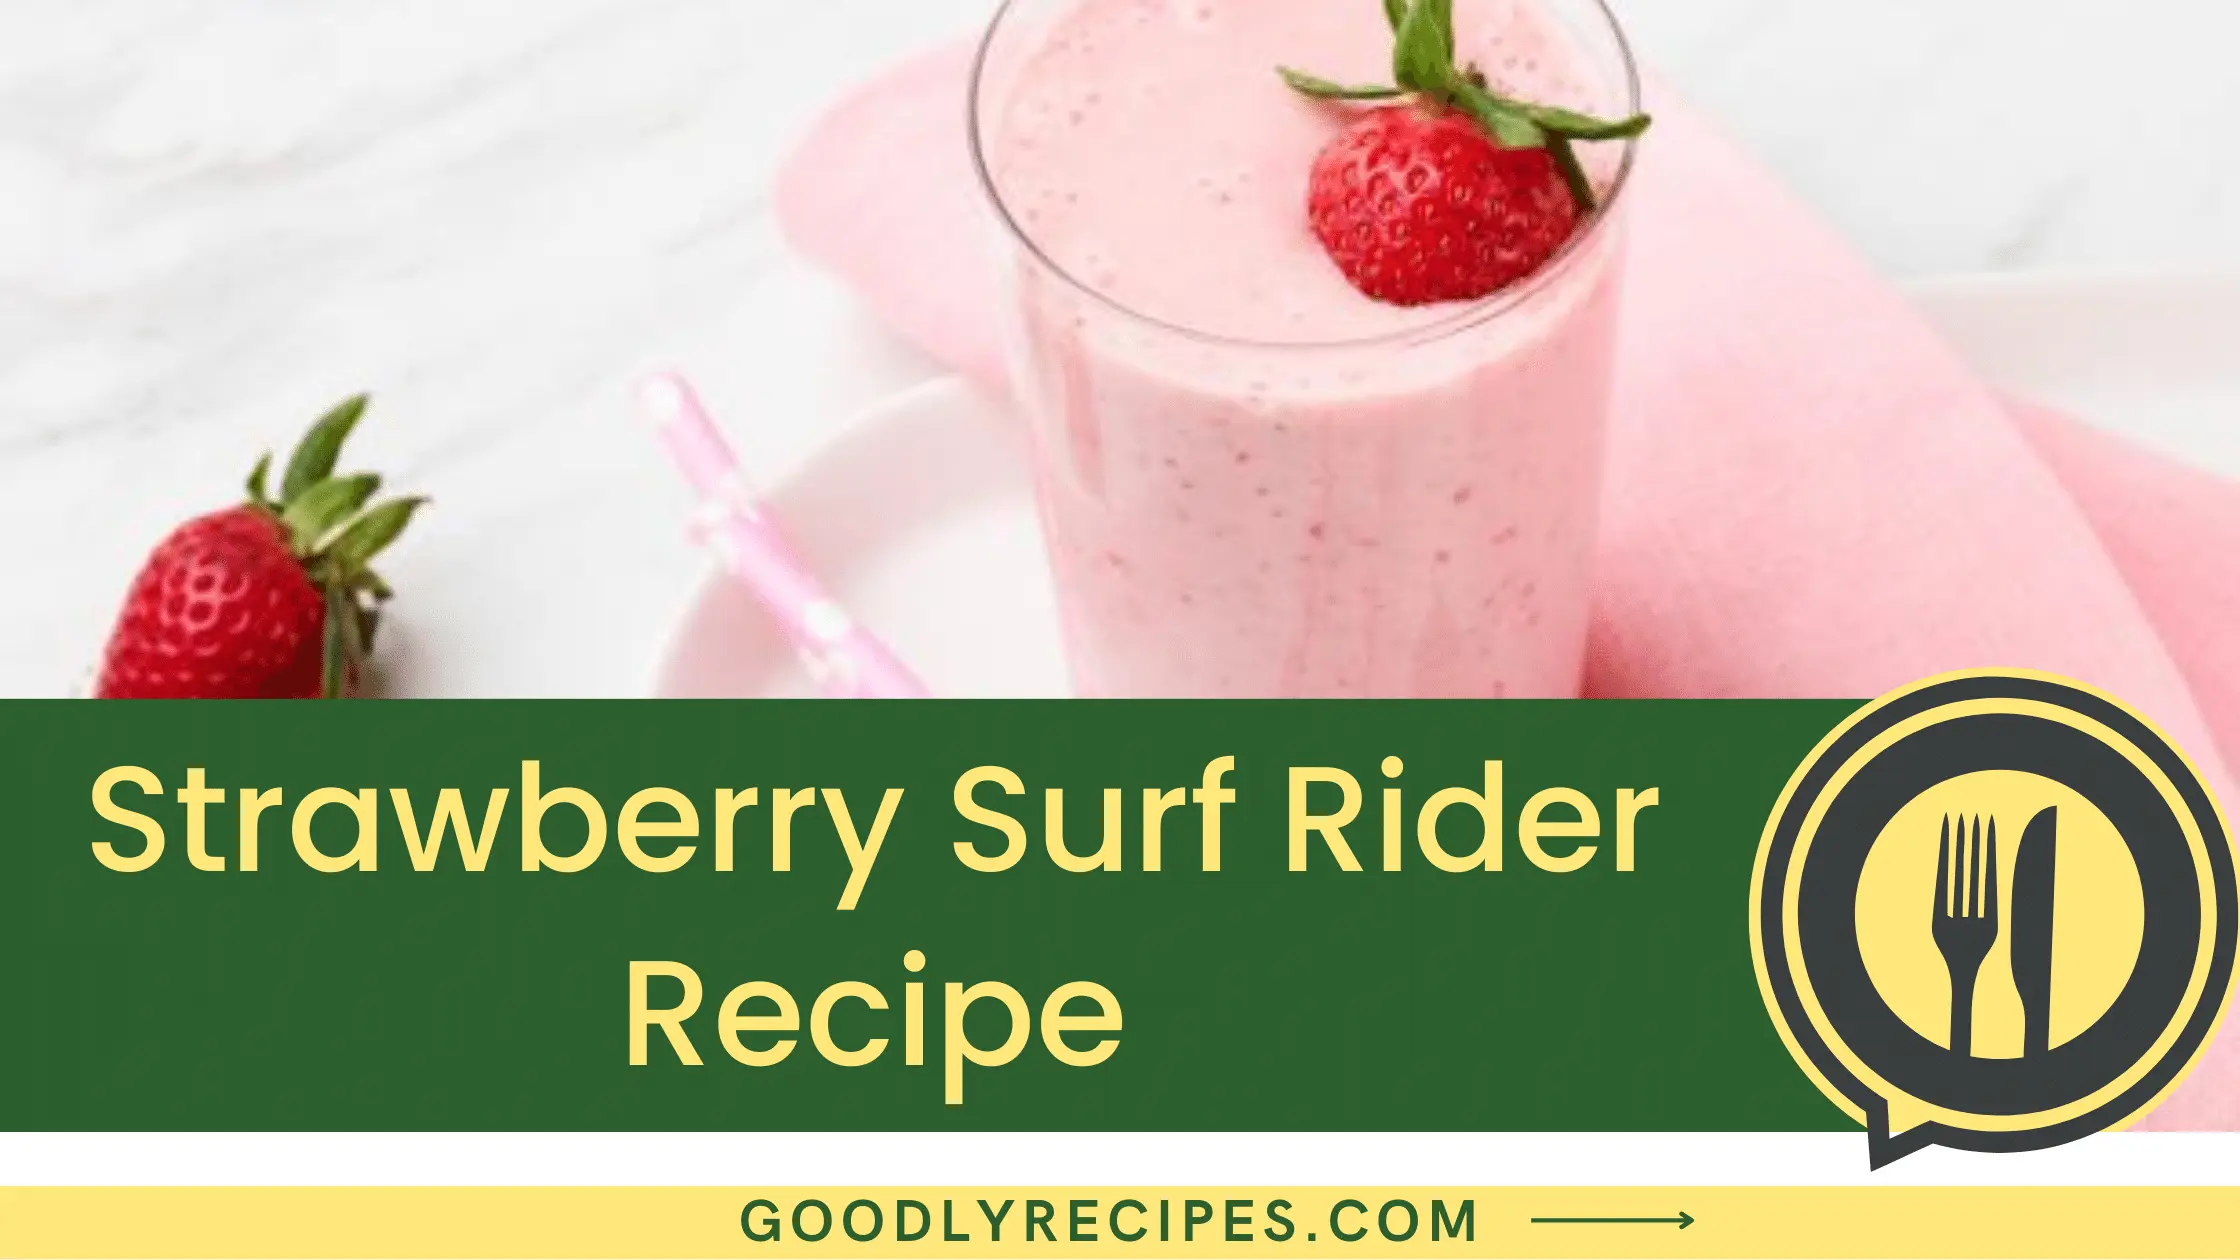 Strawberry Surf Rider Recipe